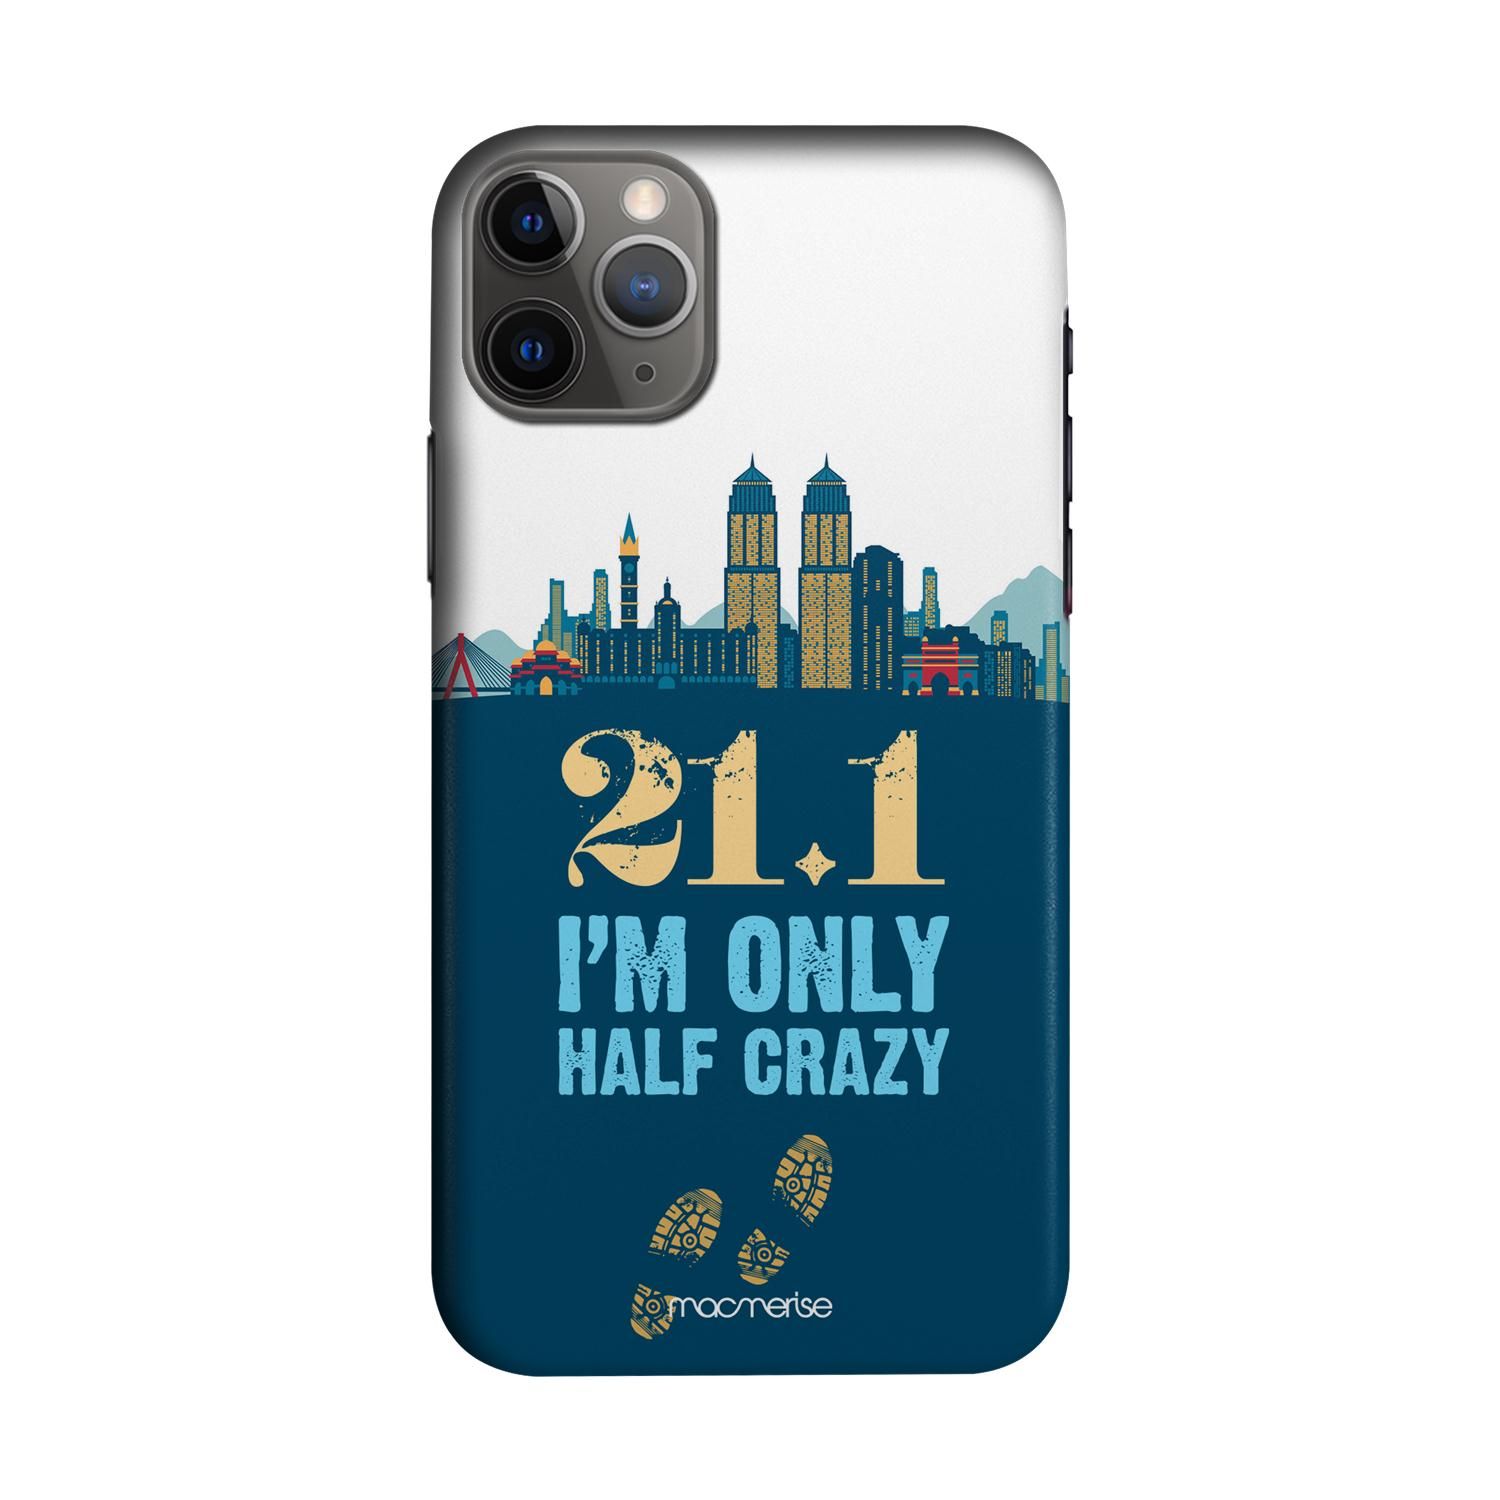 Half Crazy - Sleek Phone Case for iPhone 11 Pro Max